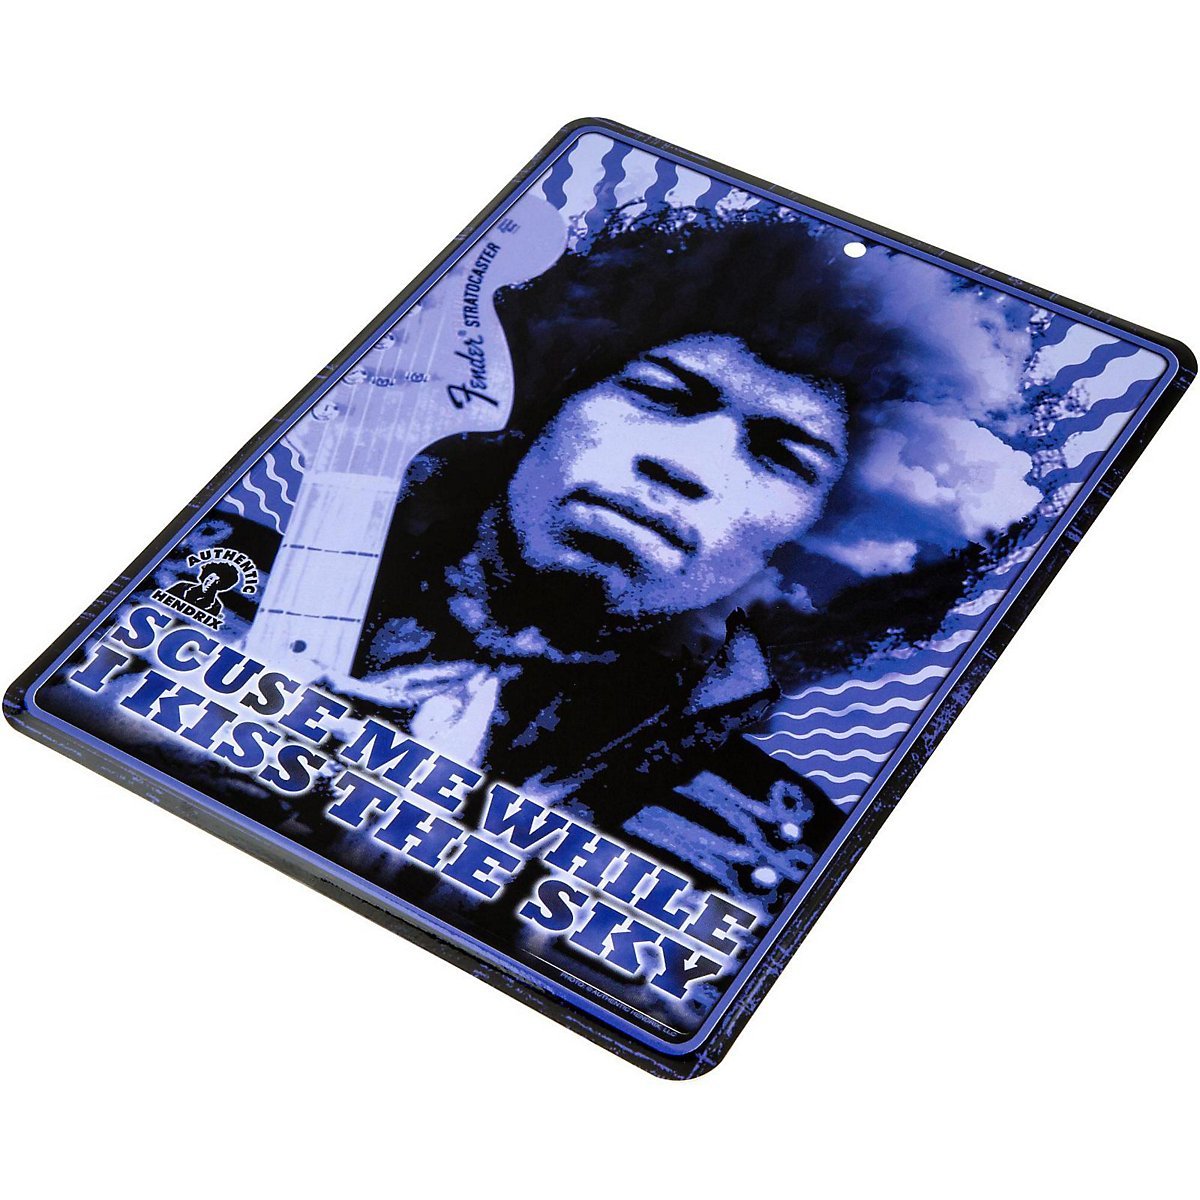 Fender Tin Sign Jimi Hendrix Kiss The Sky - Plaque & Enseigne Publicitaire - Variation 1